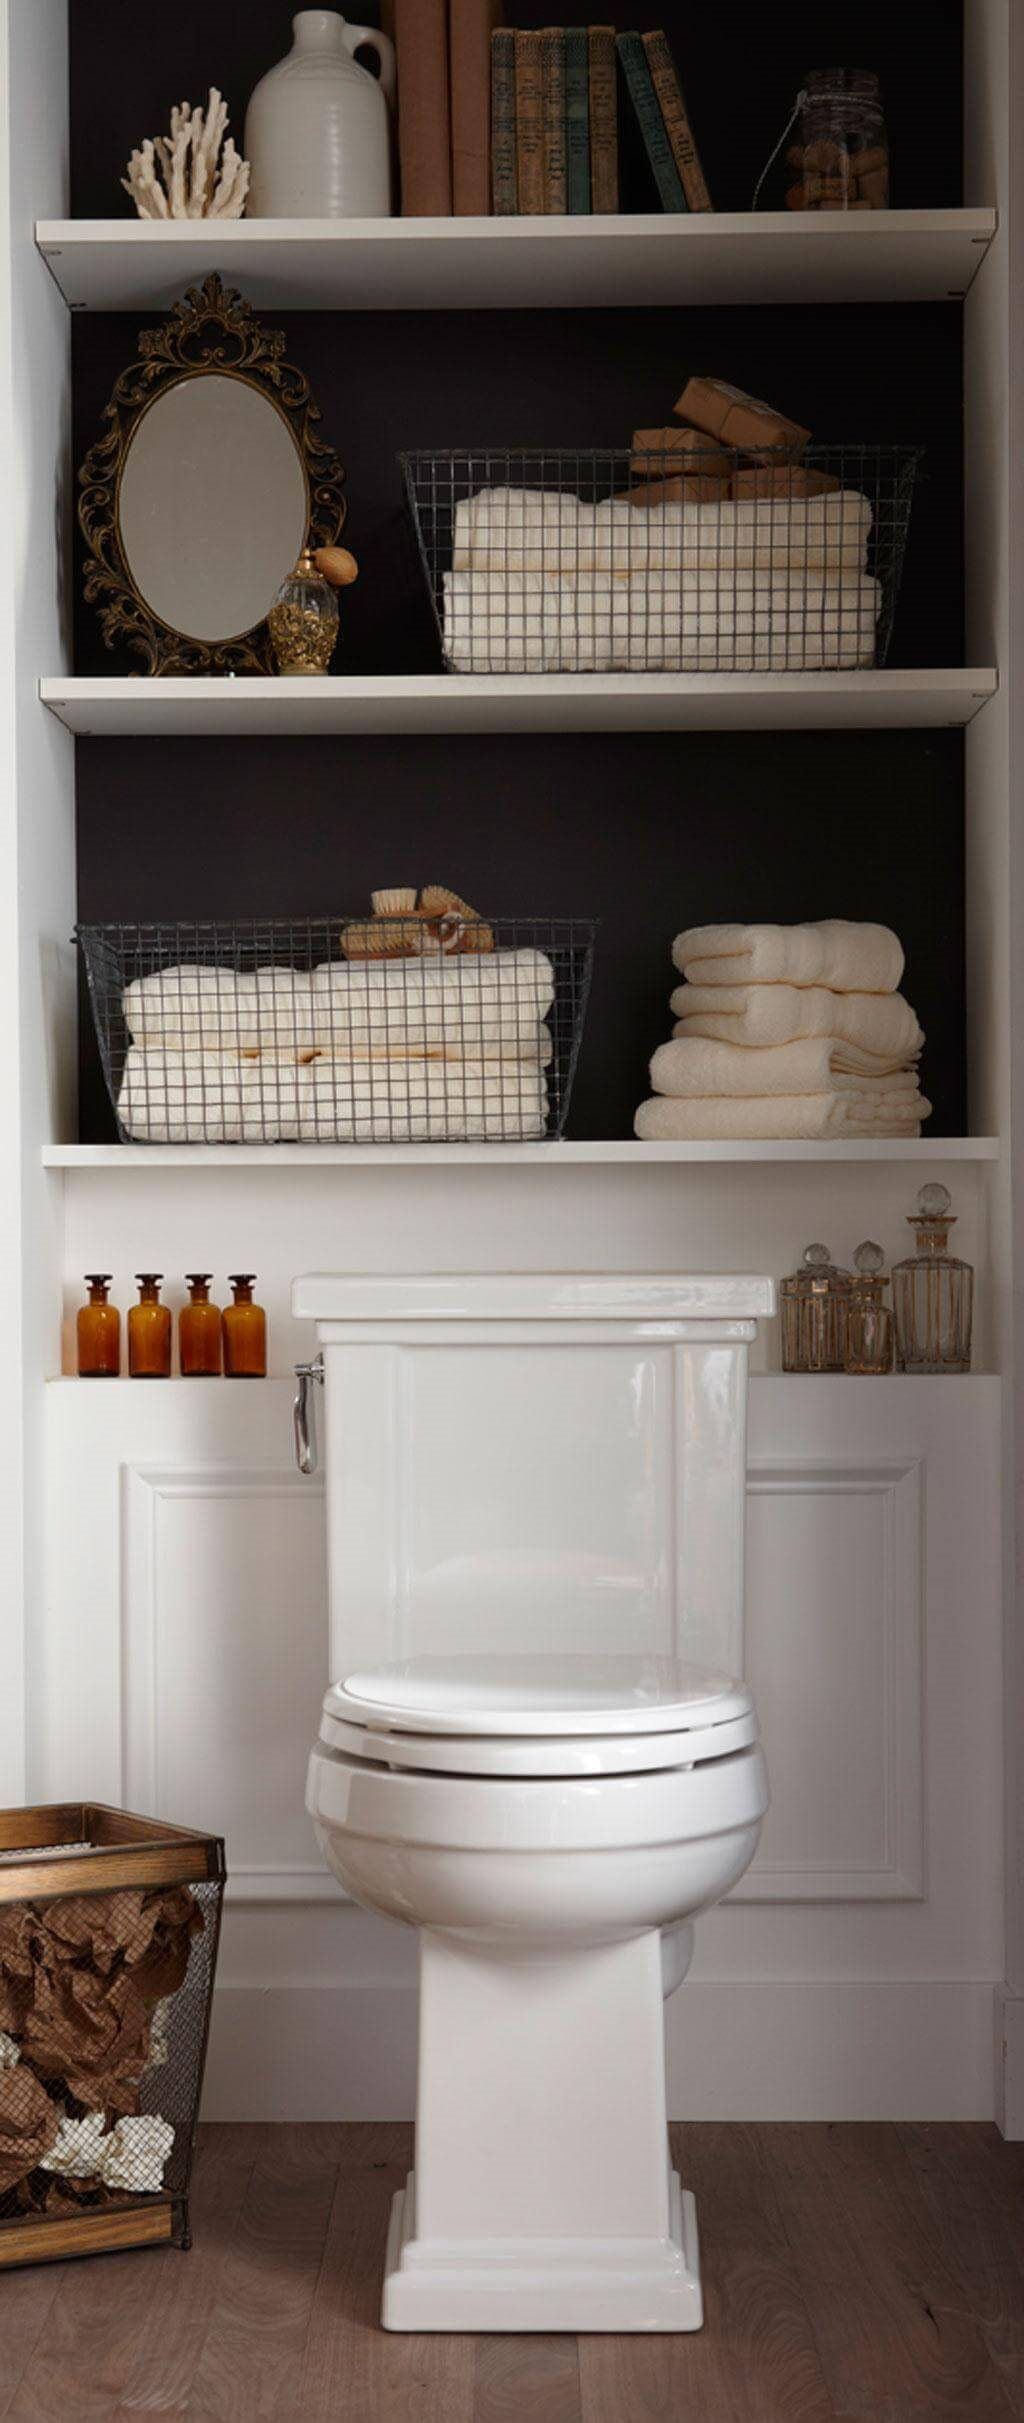 built-in-shelf-over-the-toilet-full-of-bathroom-essentials-89891.jpg